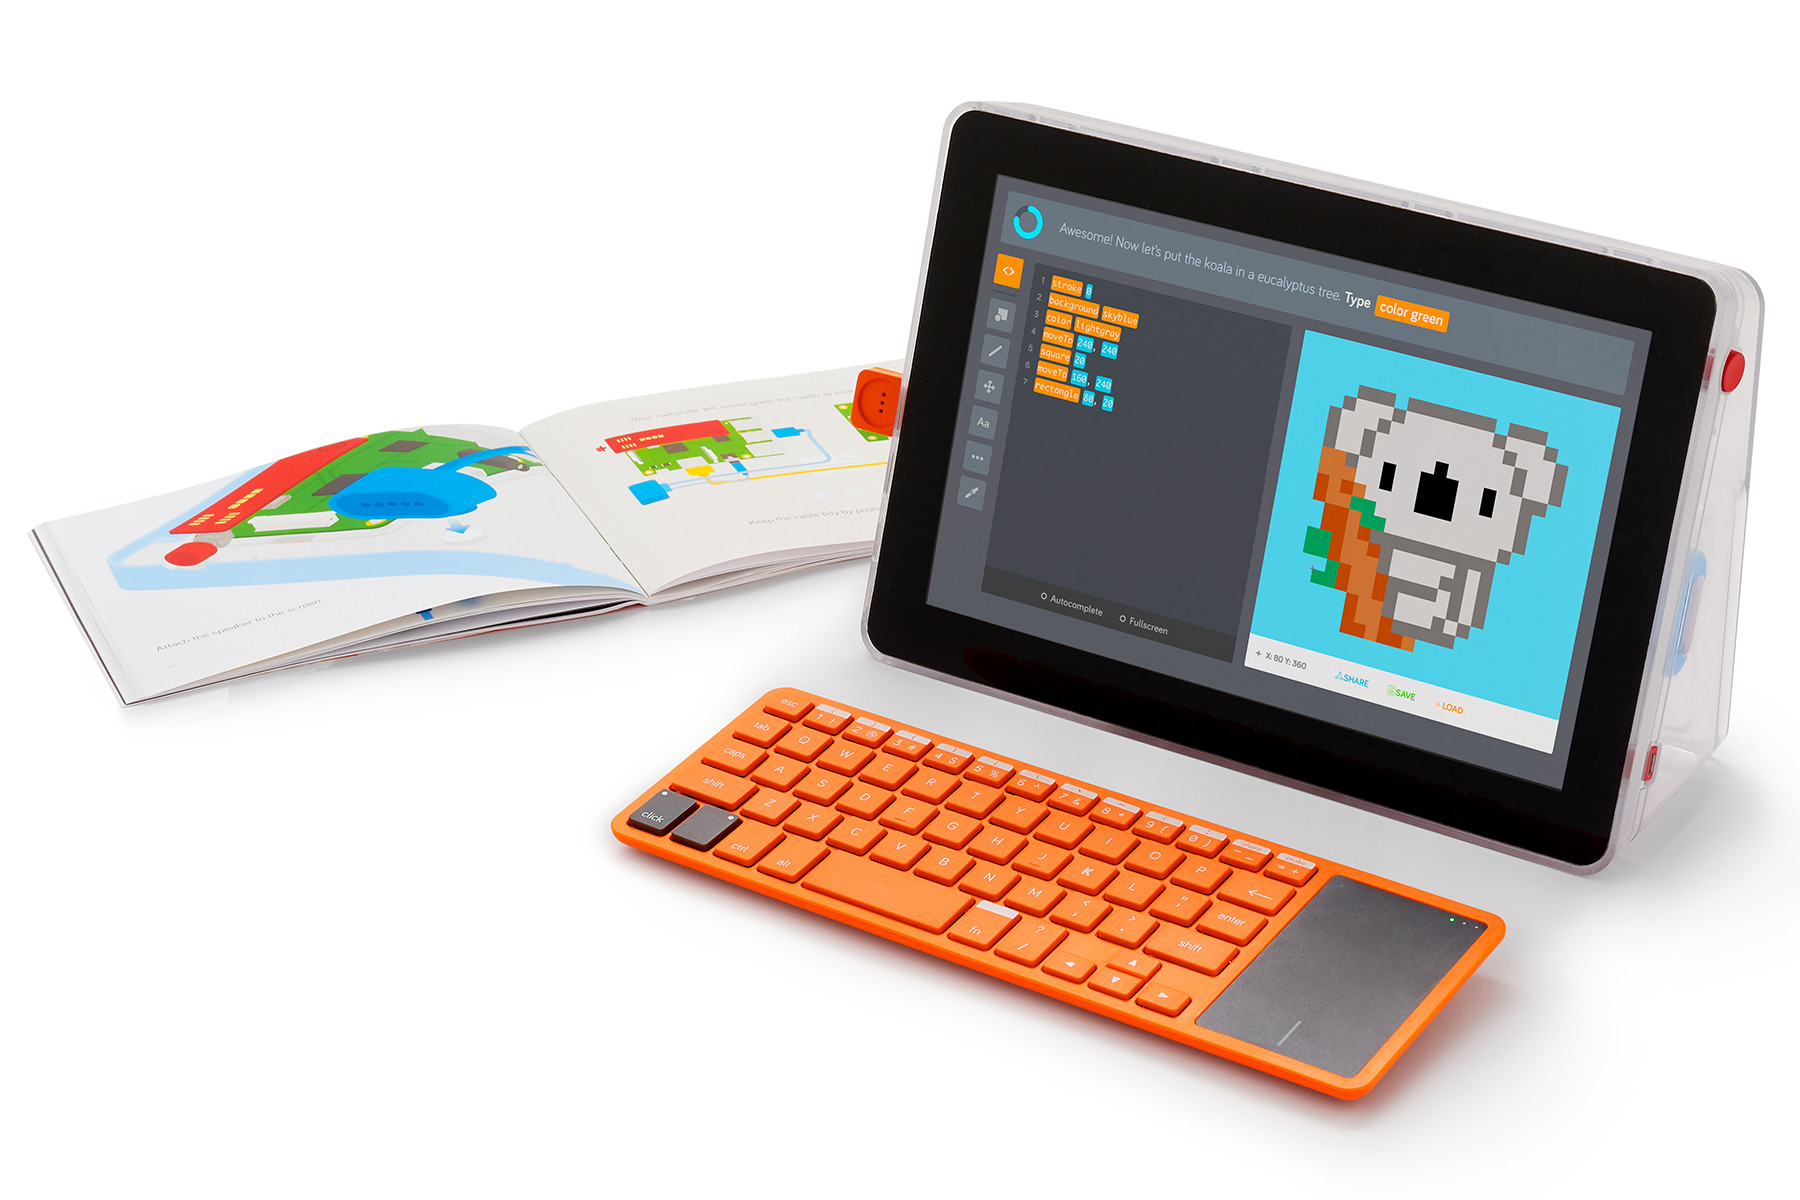 DIY Computer Kit
 Kano bines its coding kits for a DIY laptop